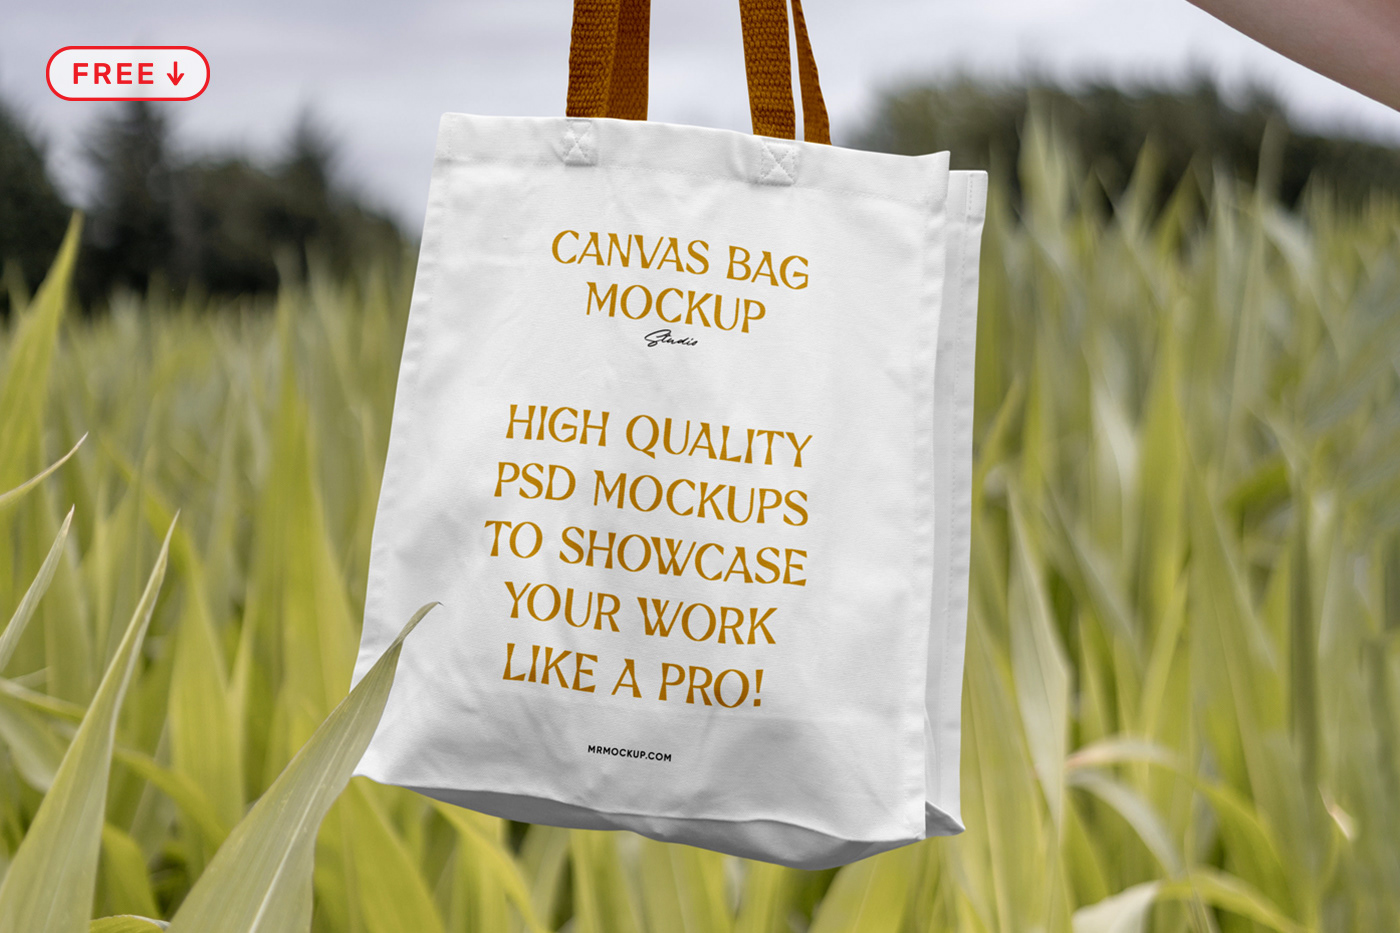 free Free Bag Mockup tote bag mockup free download Free Template psd Canvas Bag Mockup